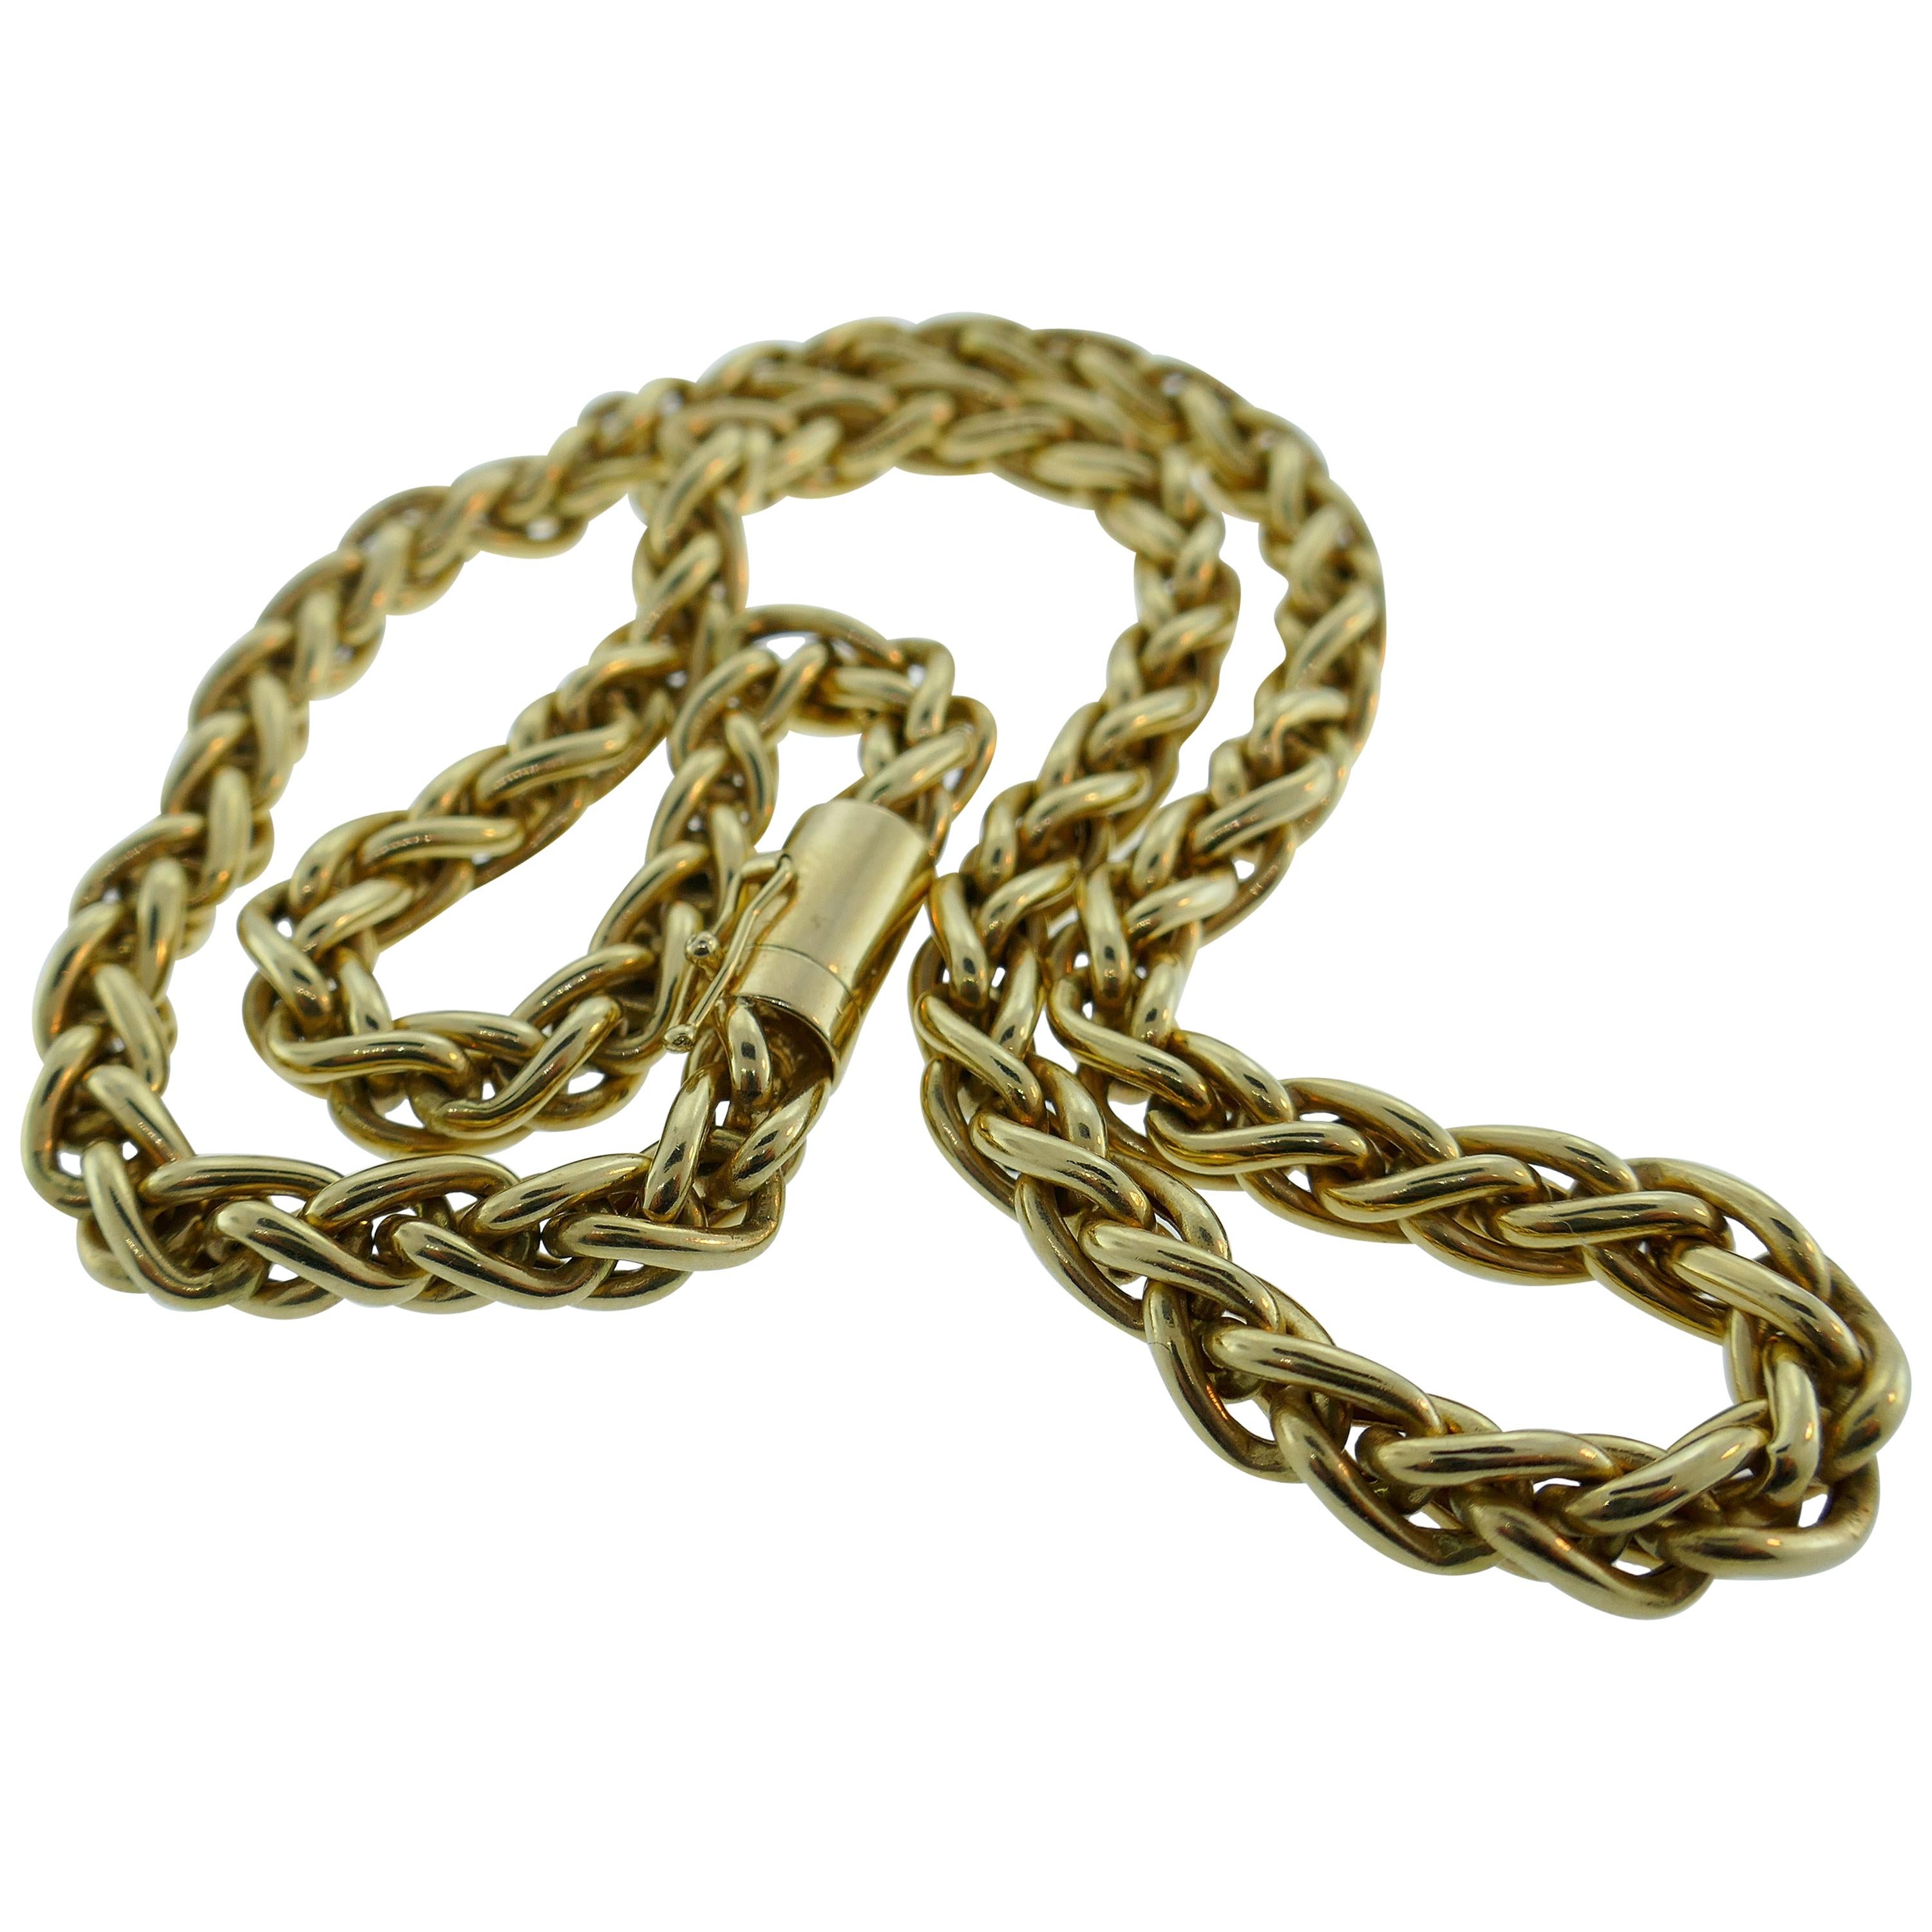 tiffany rope chain